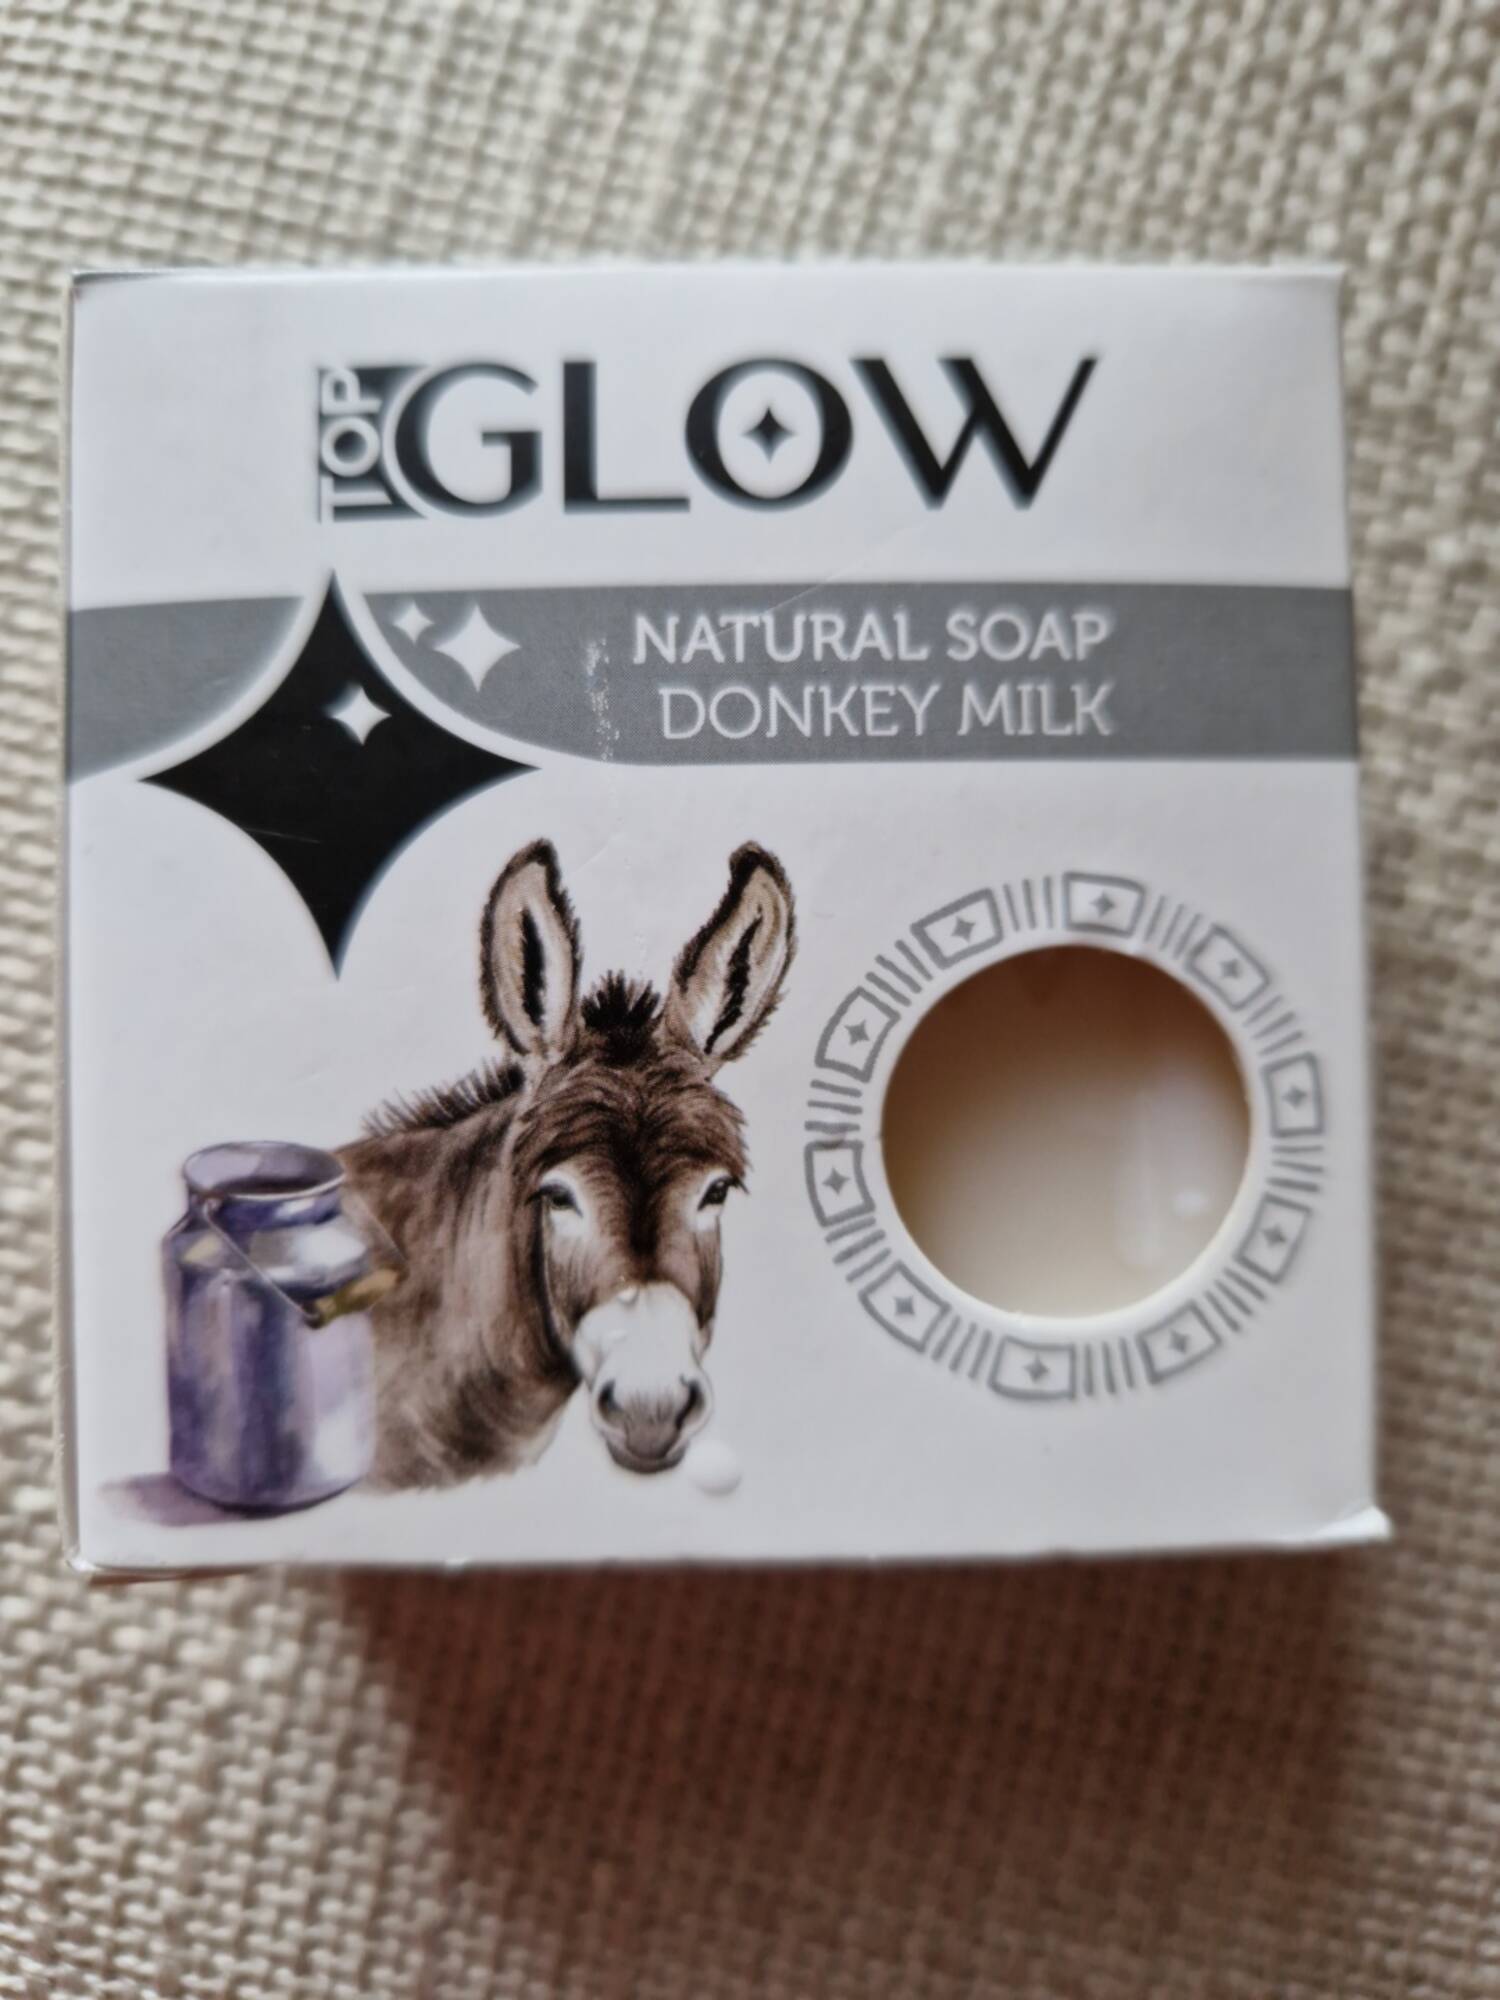 TOP GLOW - Donkey milk - Natural soap